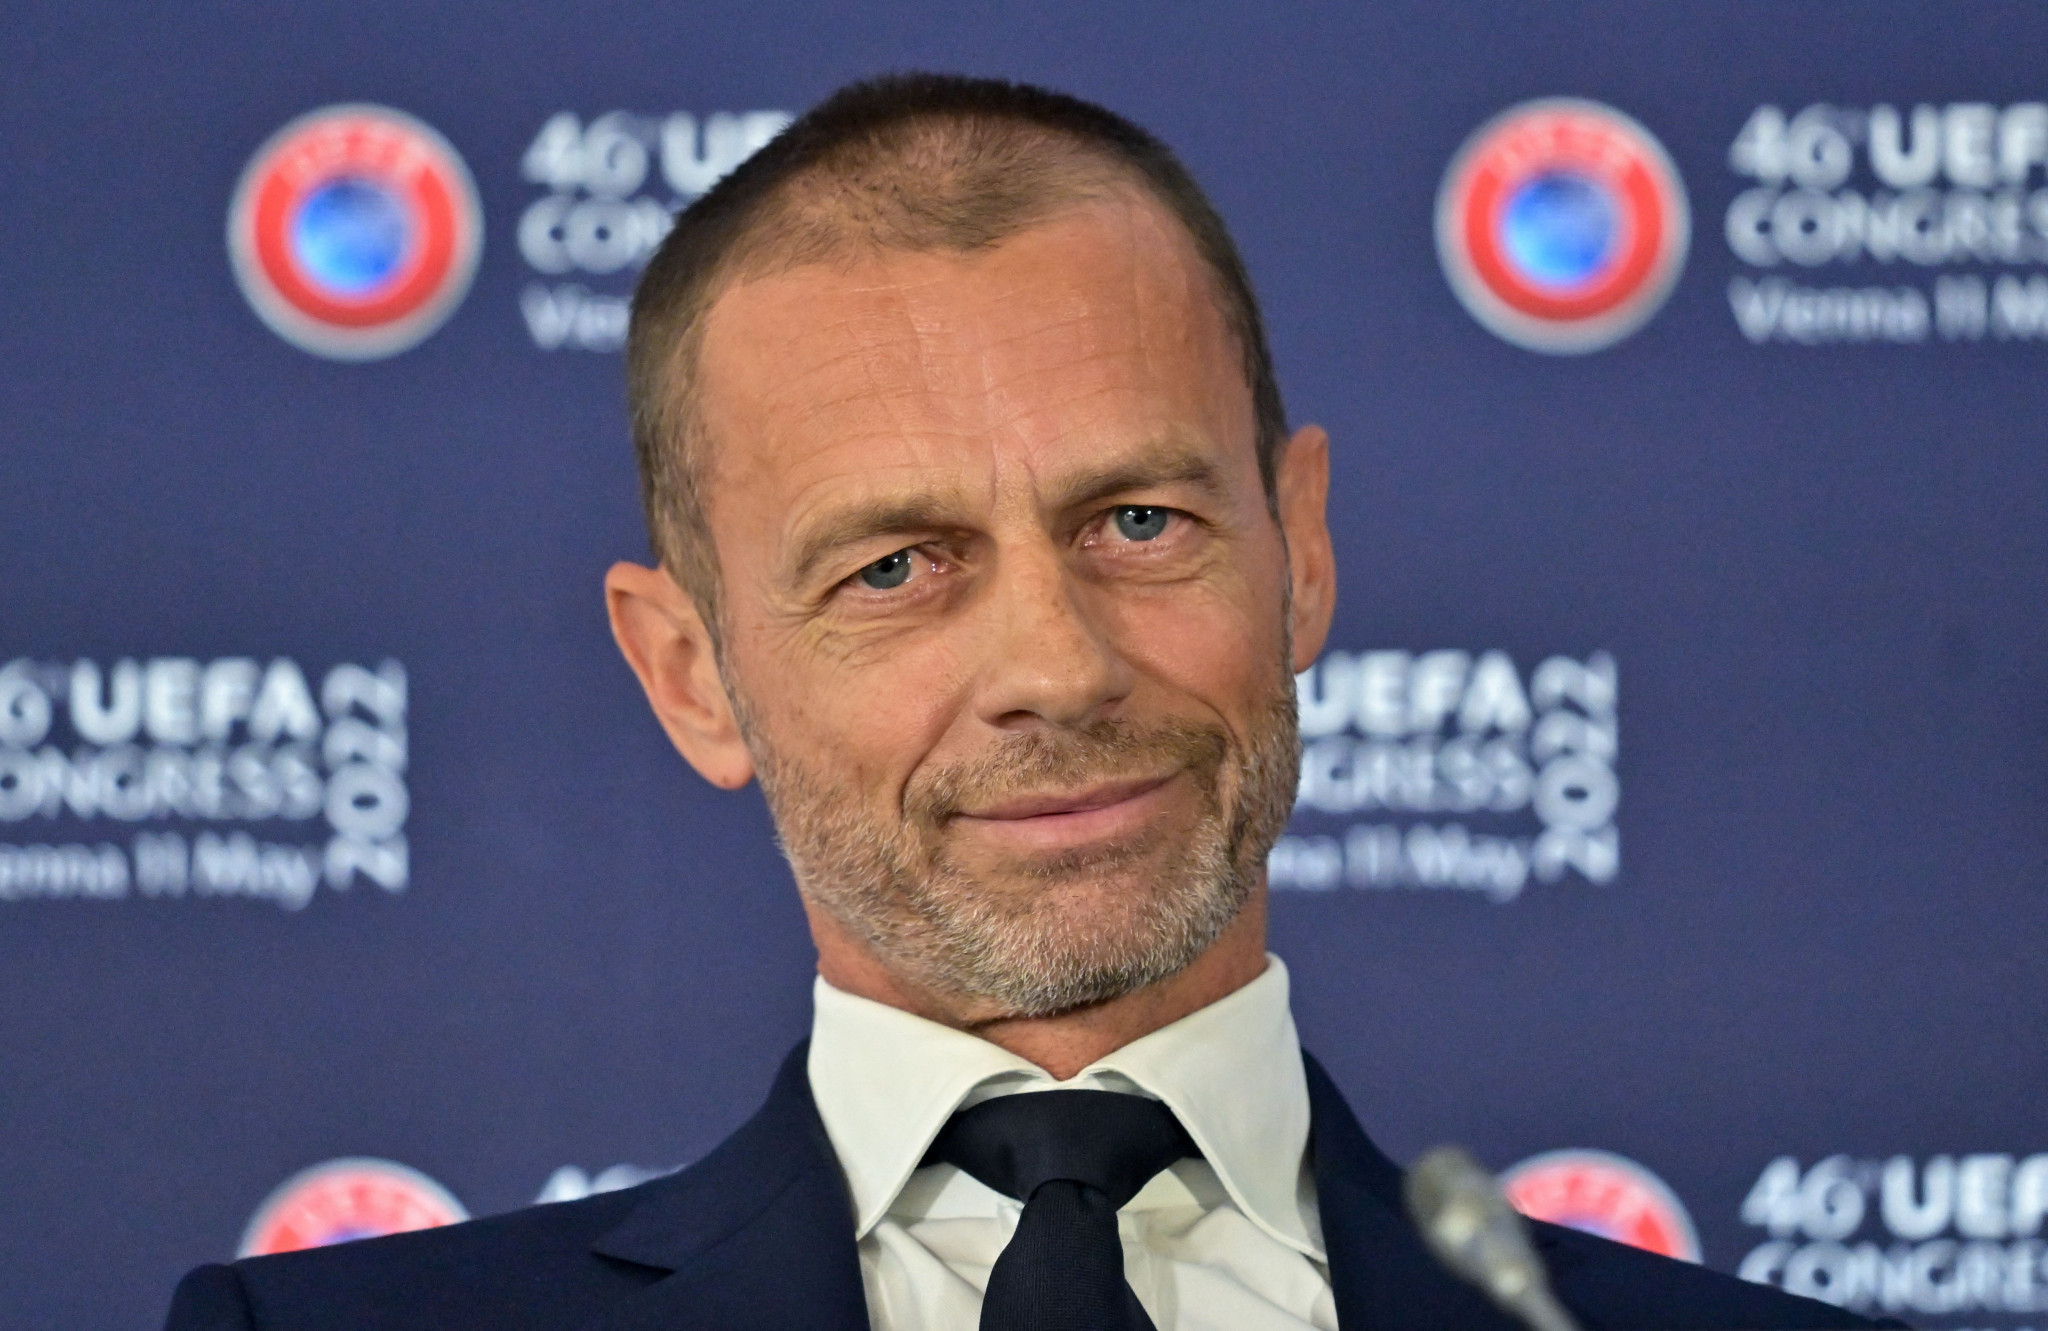 Under-fire Čeferin re-confirmed as standing unopposed for UEFA Presidency re-election